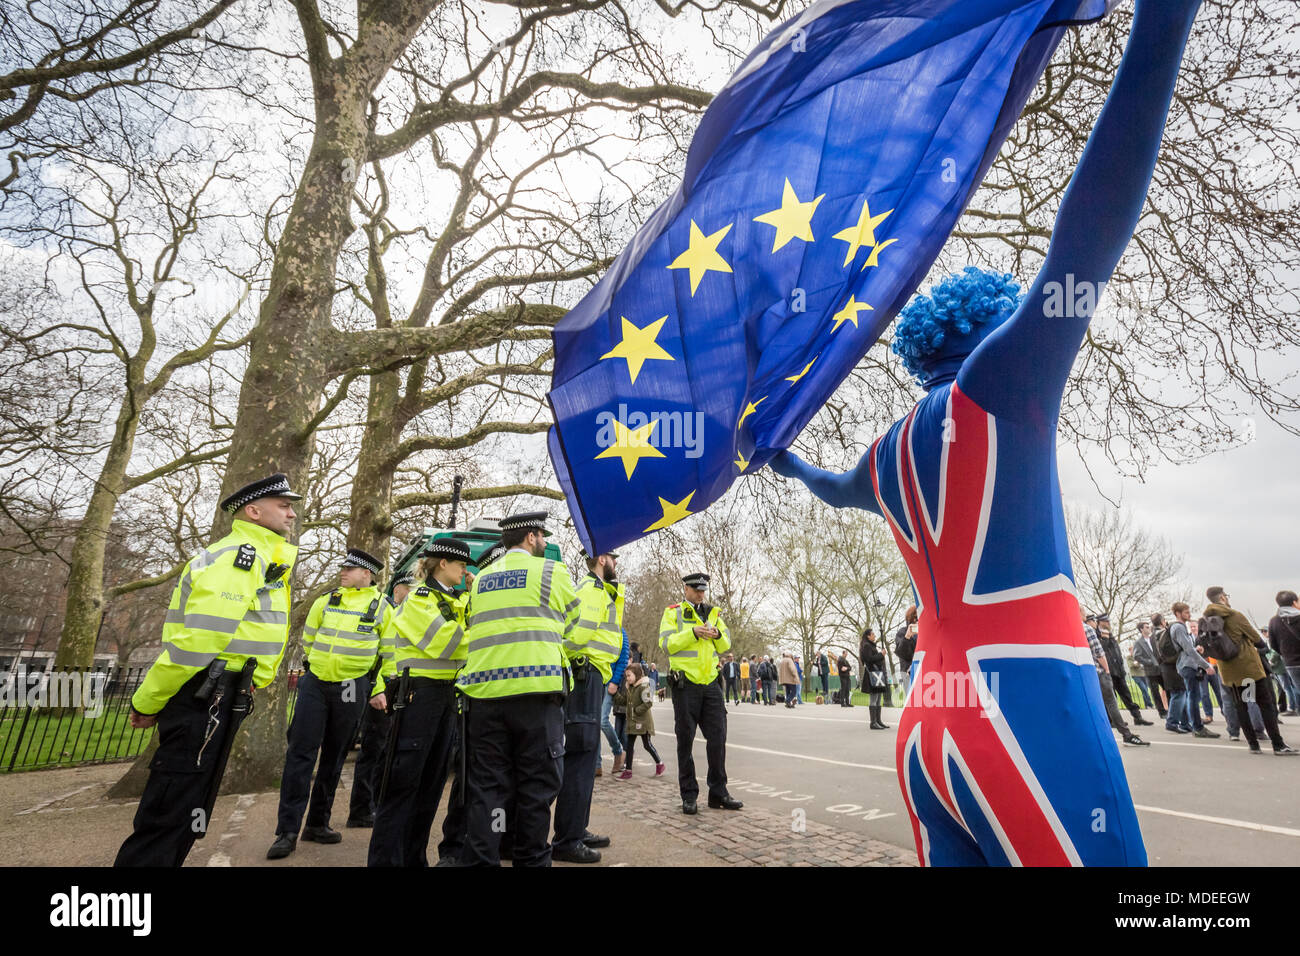 Pro-EU protester waving flag of Europe wearing British flag bodysuit demonstrates at Speaker's Corner, Hyde Park in London. Stock Photo